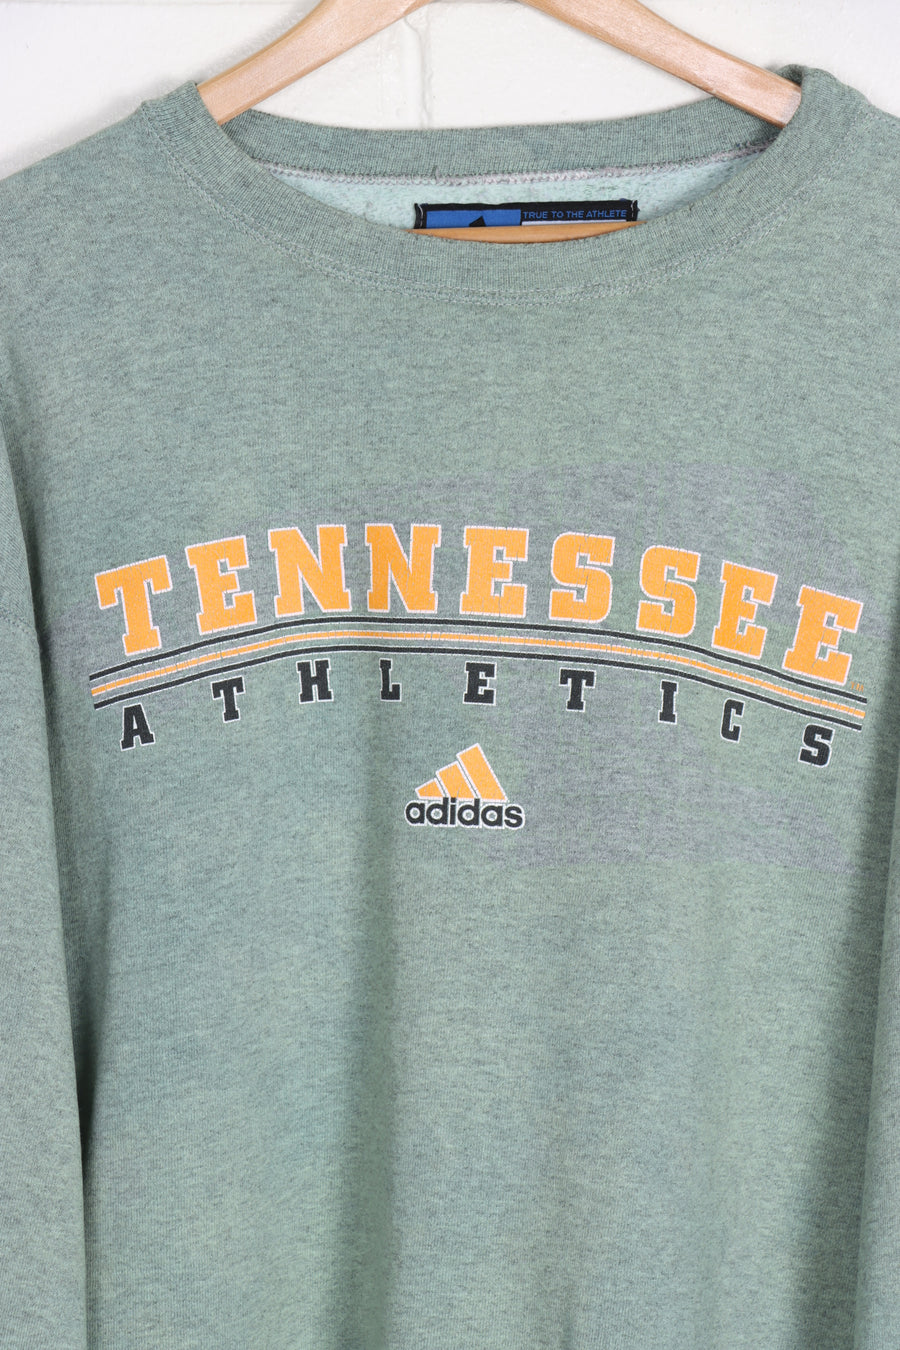 ADIDAS Tennessee Athletics Orange & Green Sweatshirt (XXL)